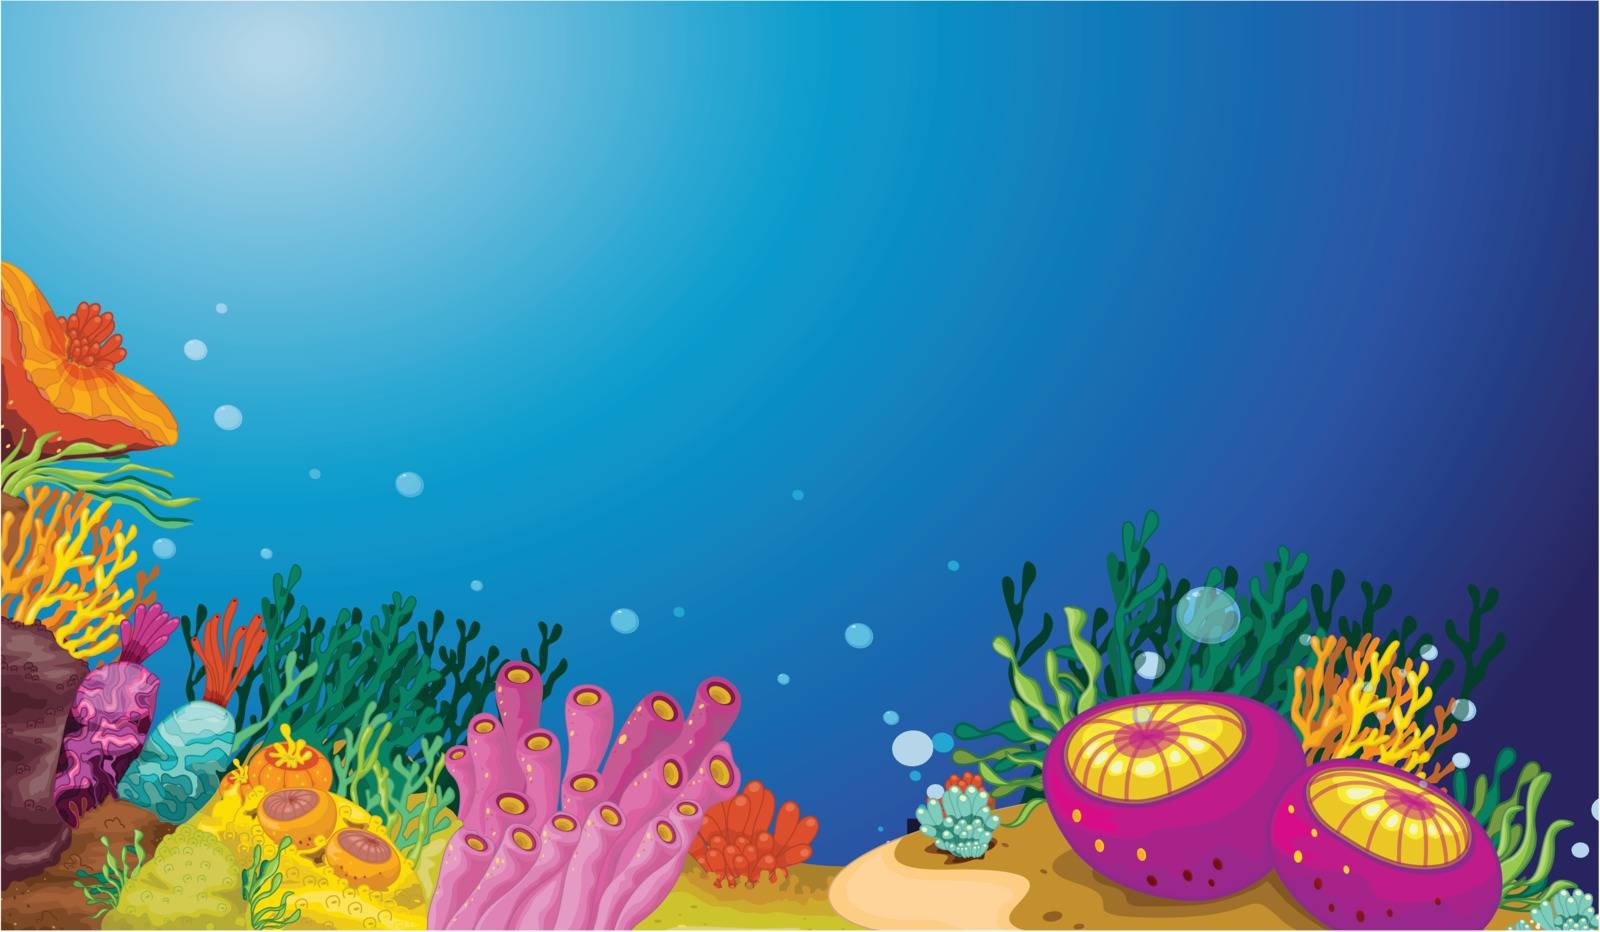 Illustration of an underwater world